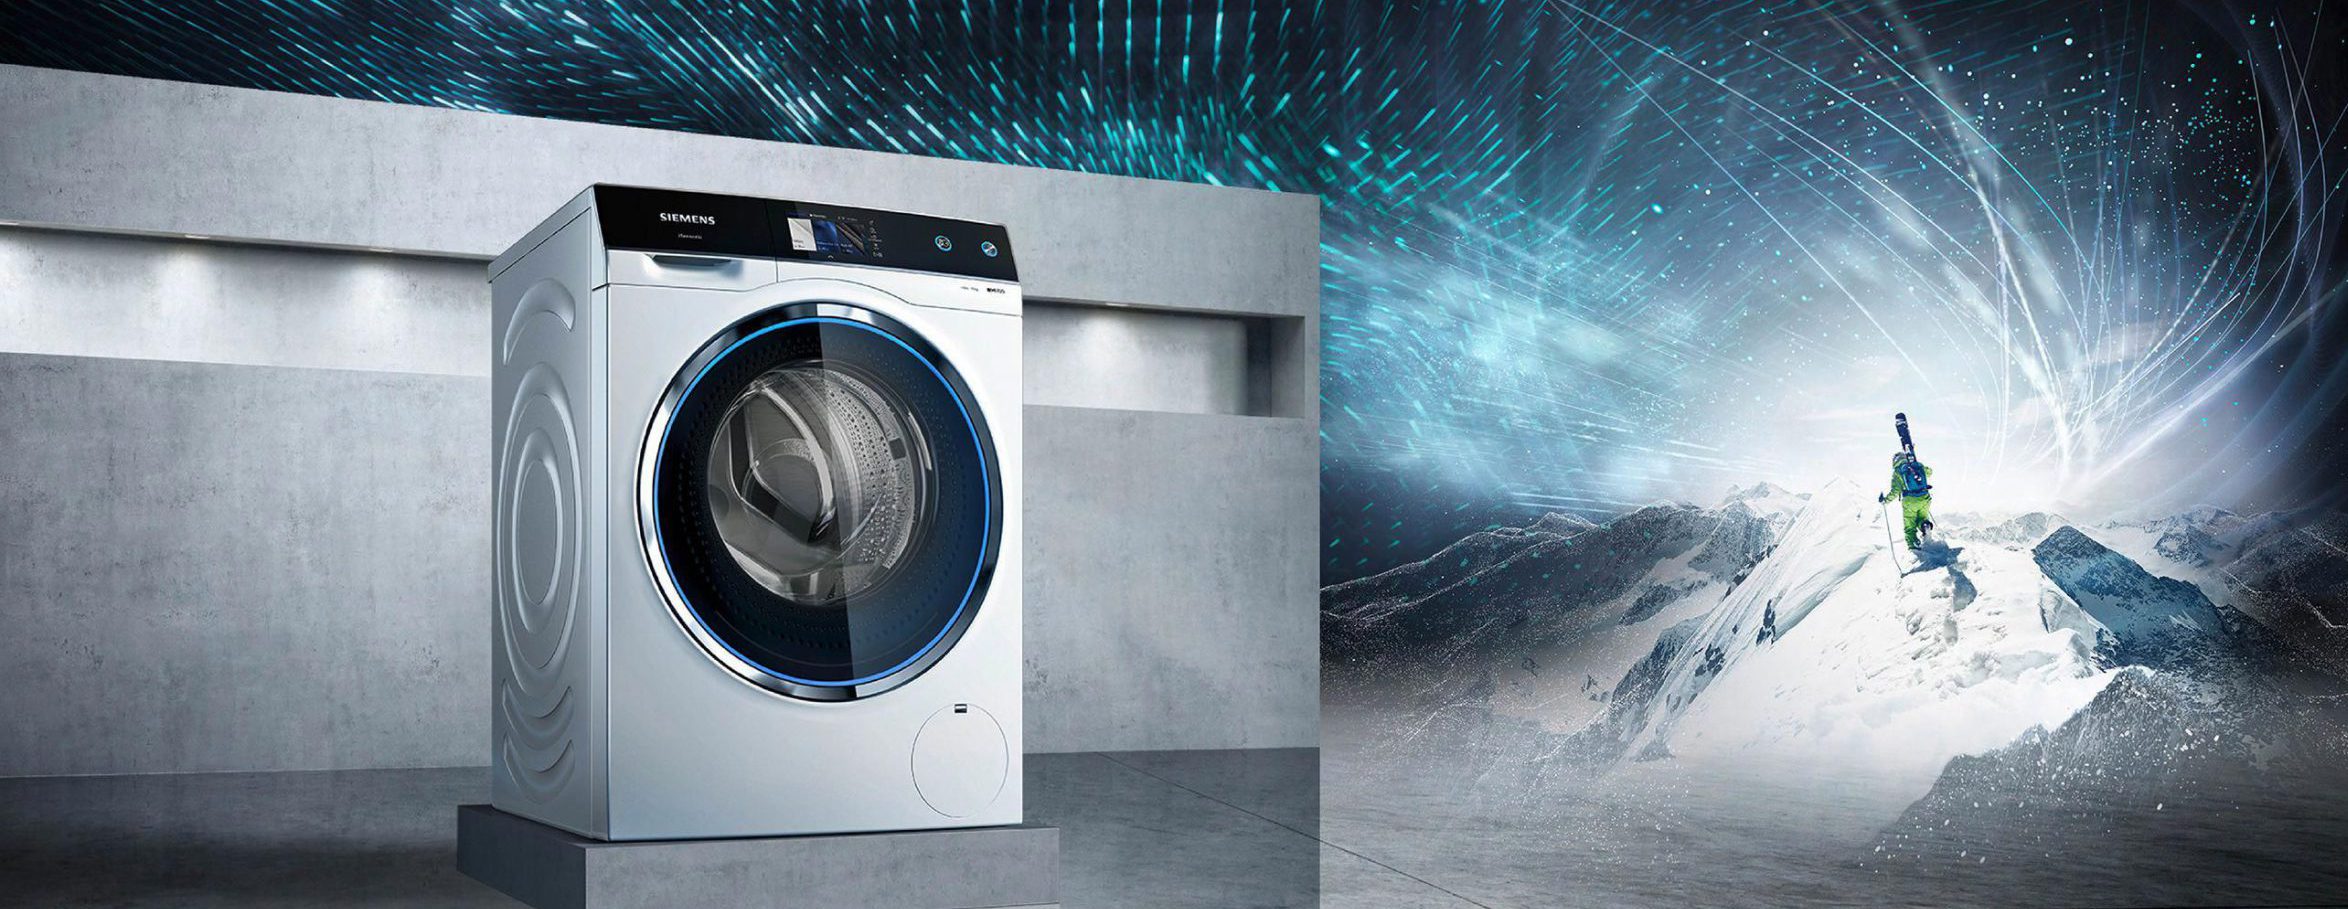 ماشین لباسشویی washing machine